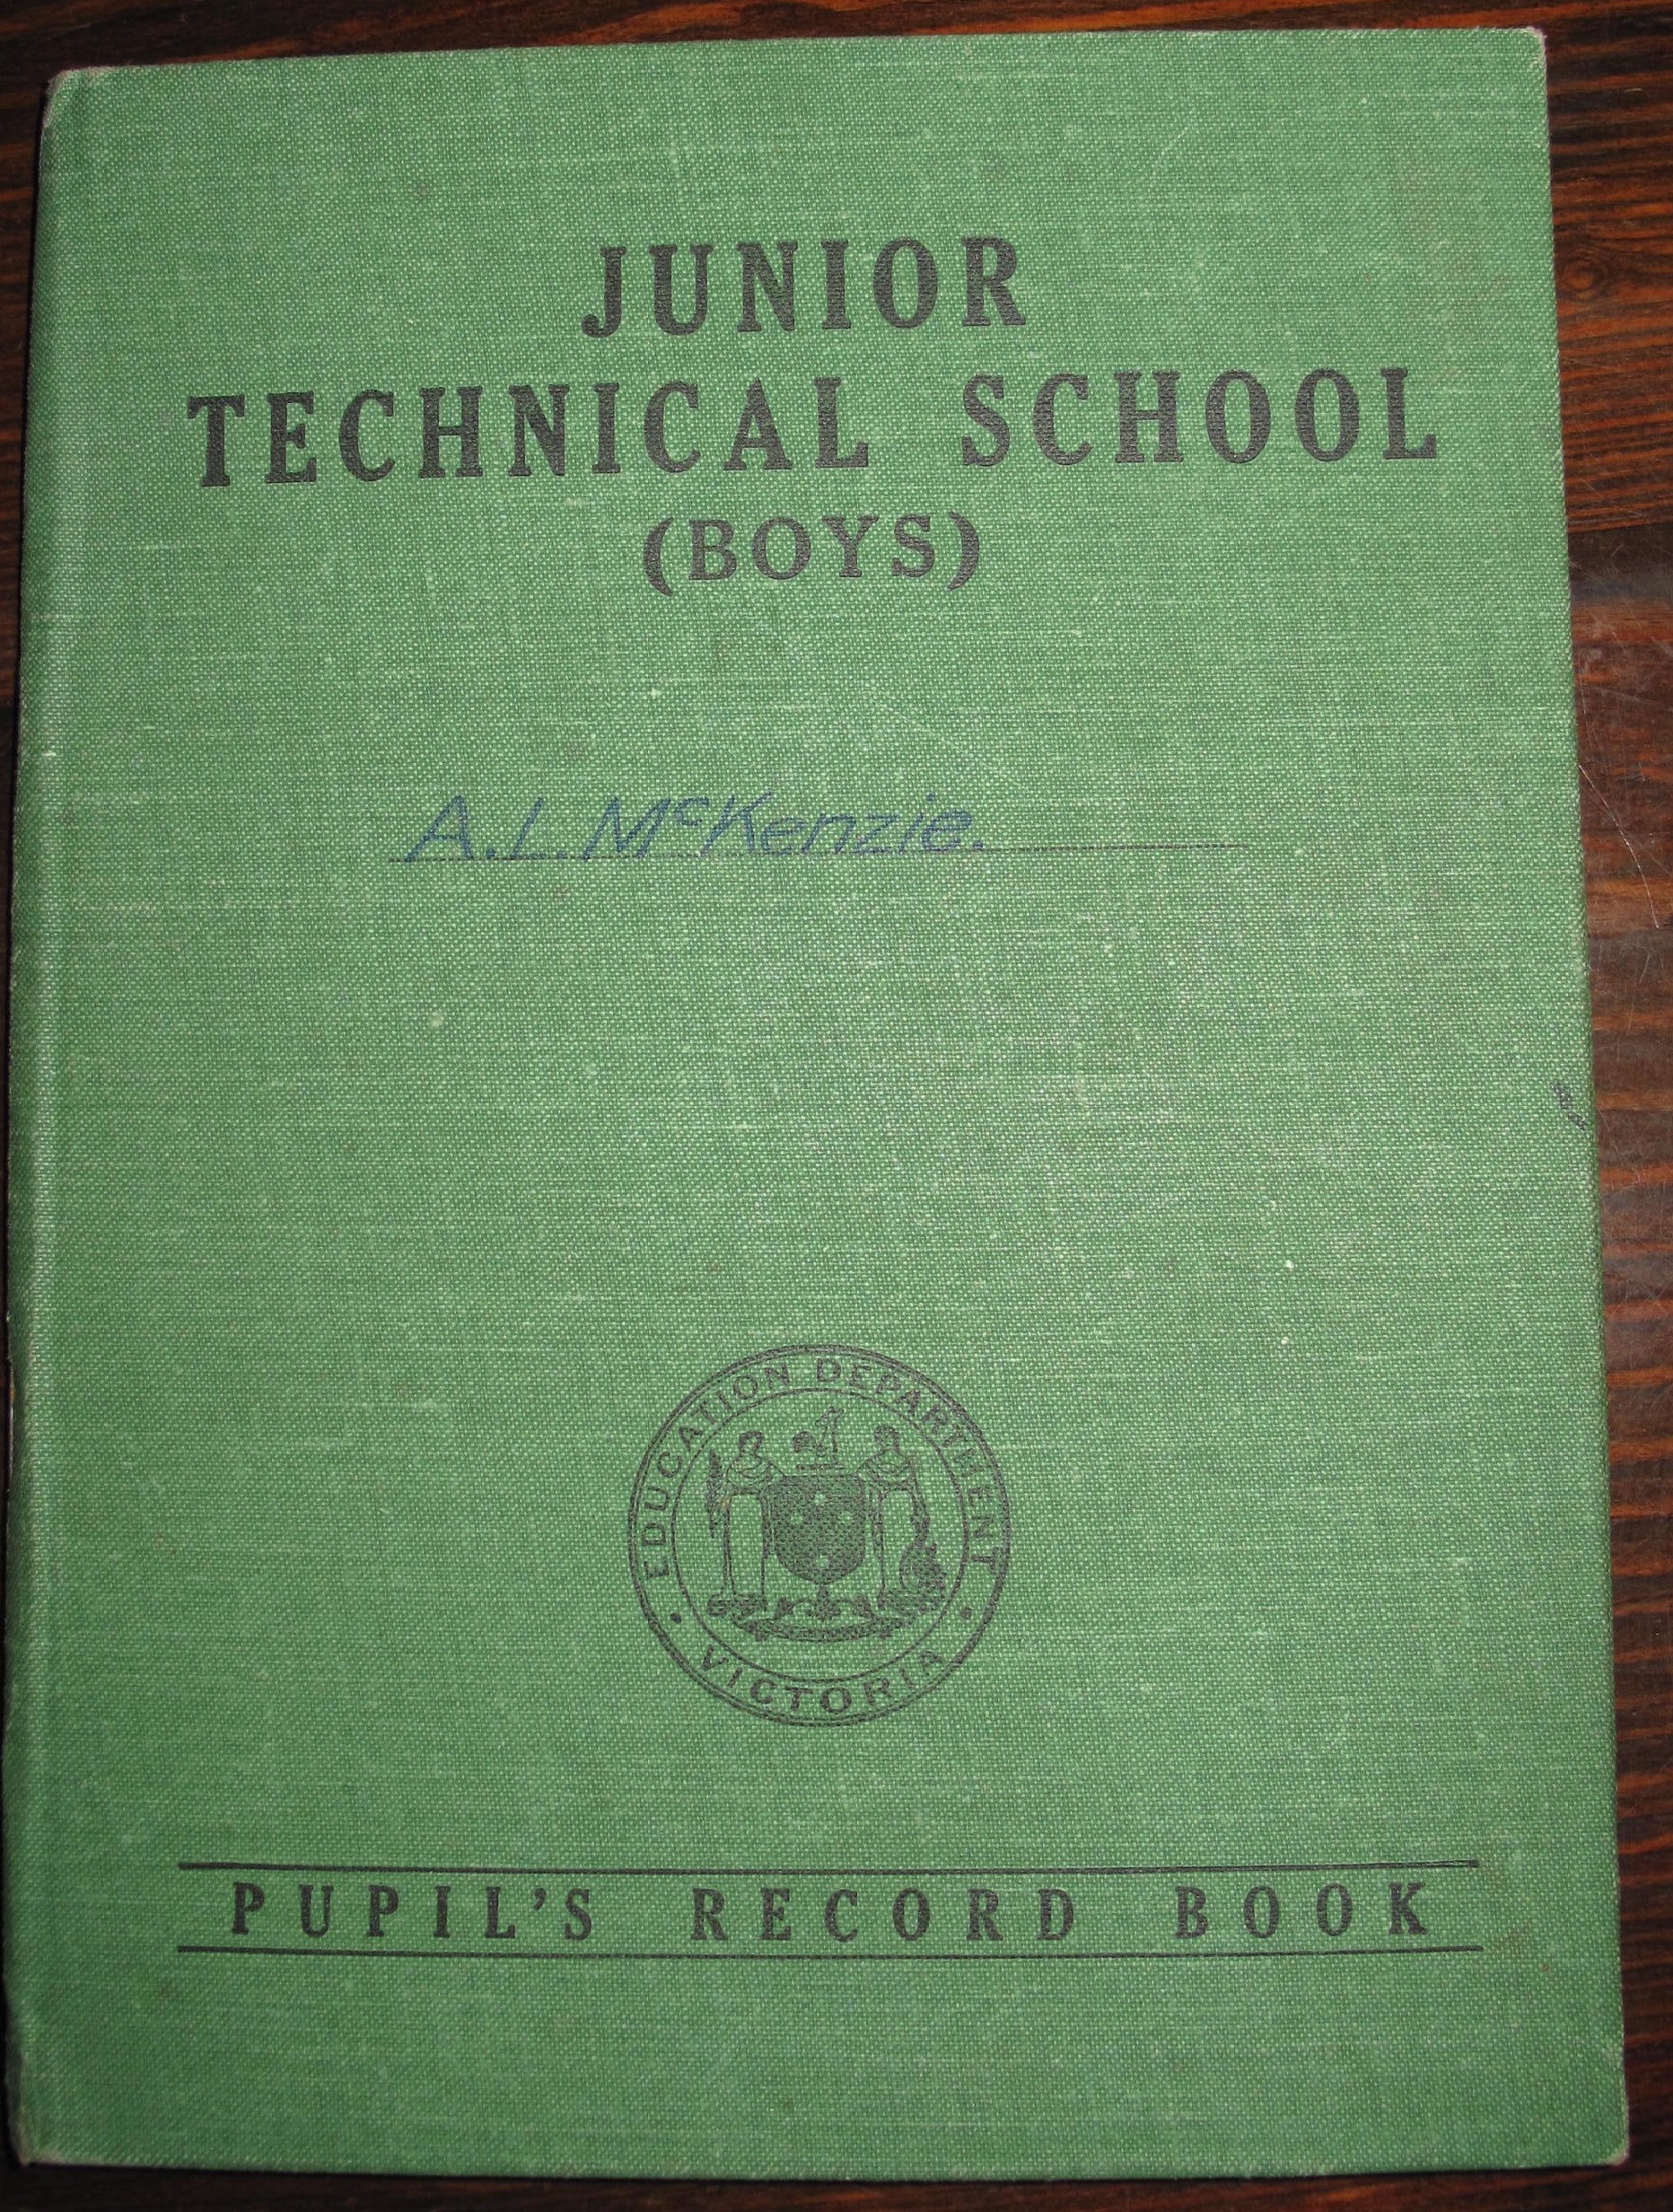 Alf McKenzie's Pupil's Record Book from Boys' Technical School Ballarat